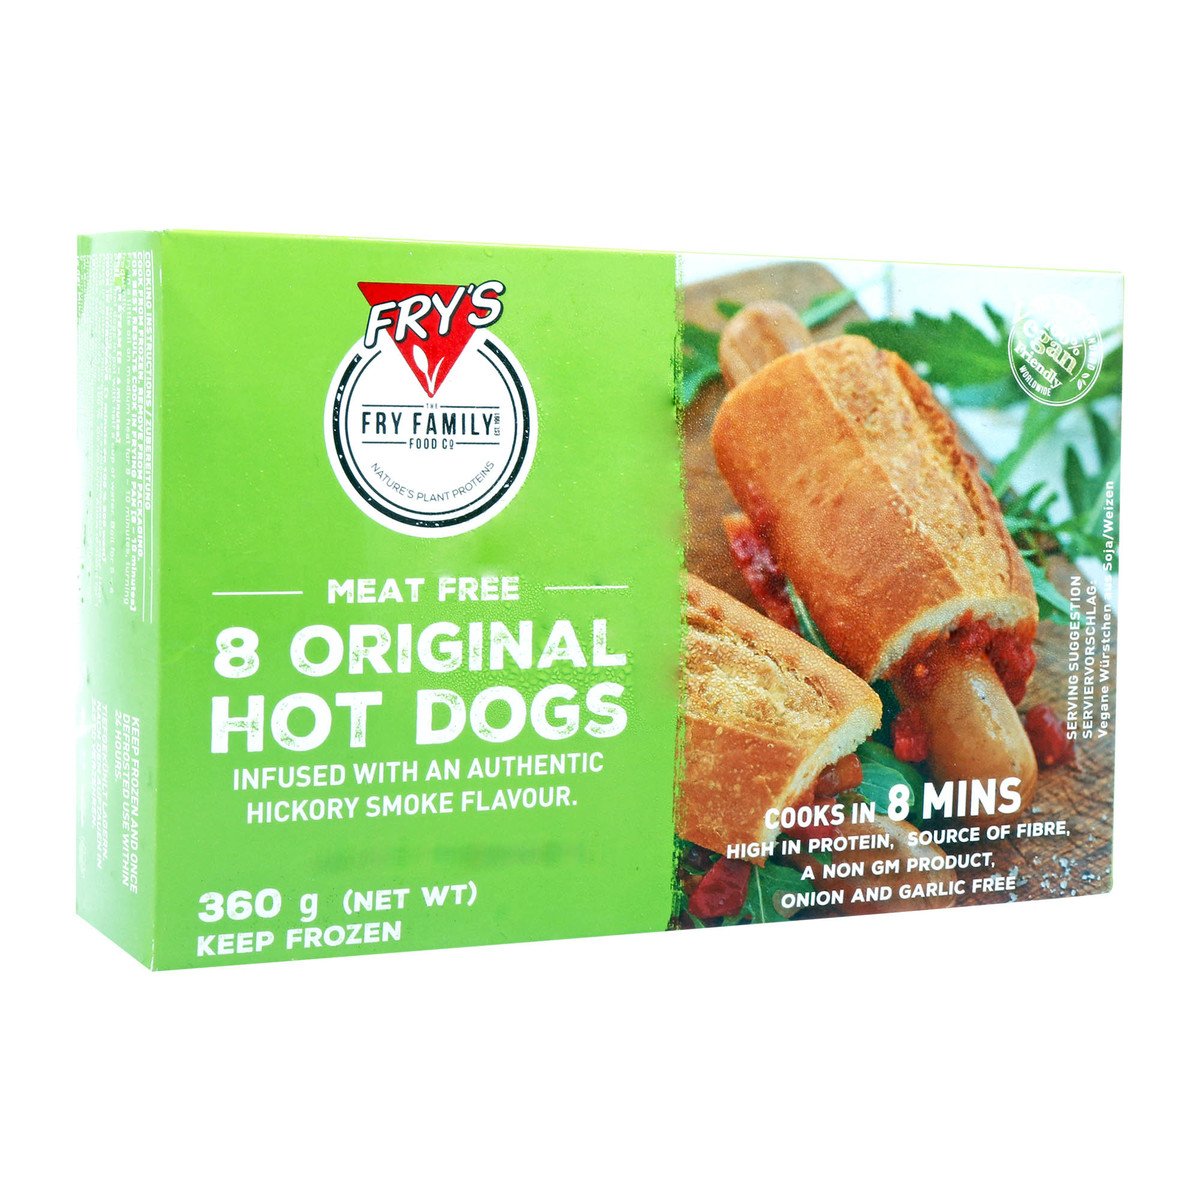 Fry's Family Meat Free 8 Original Hotdogs 360g